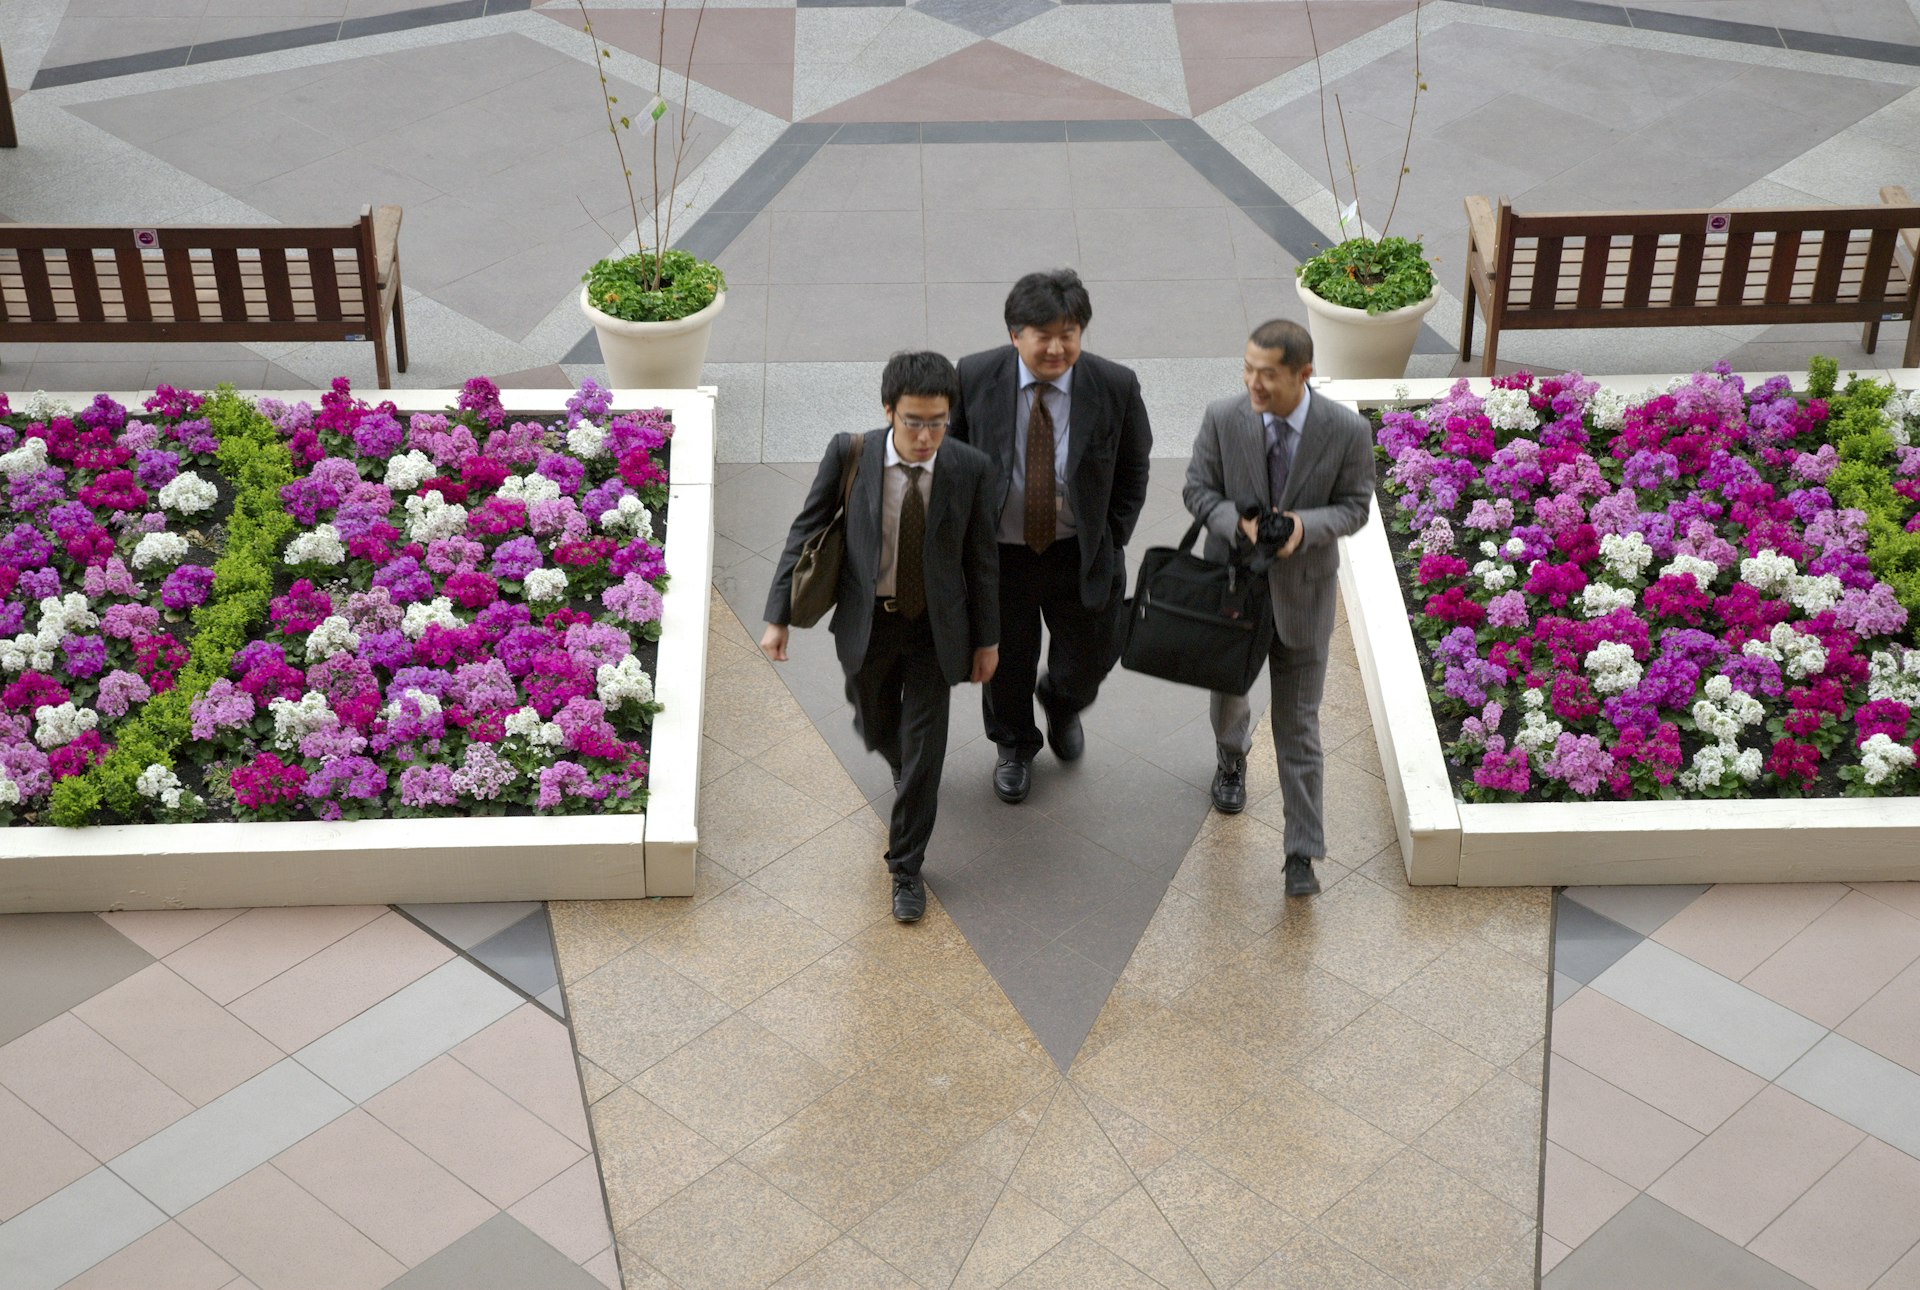 Three suited businessmen walkl past some flower beds in Yebisu Garden Place, Ebsiu in Tokyo